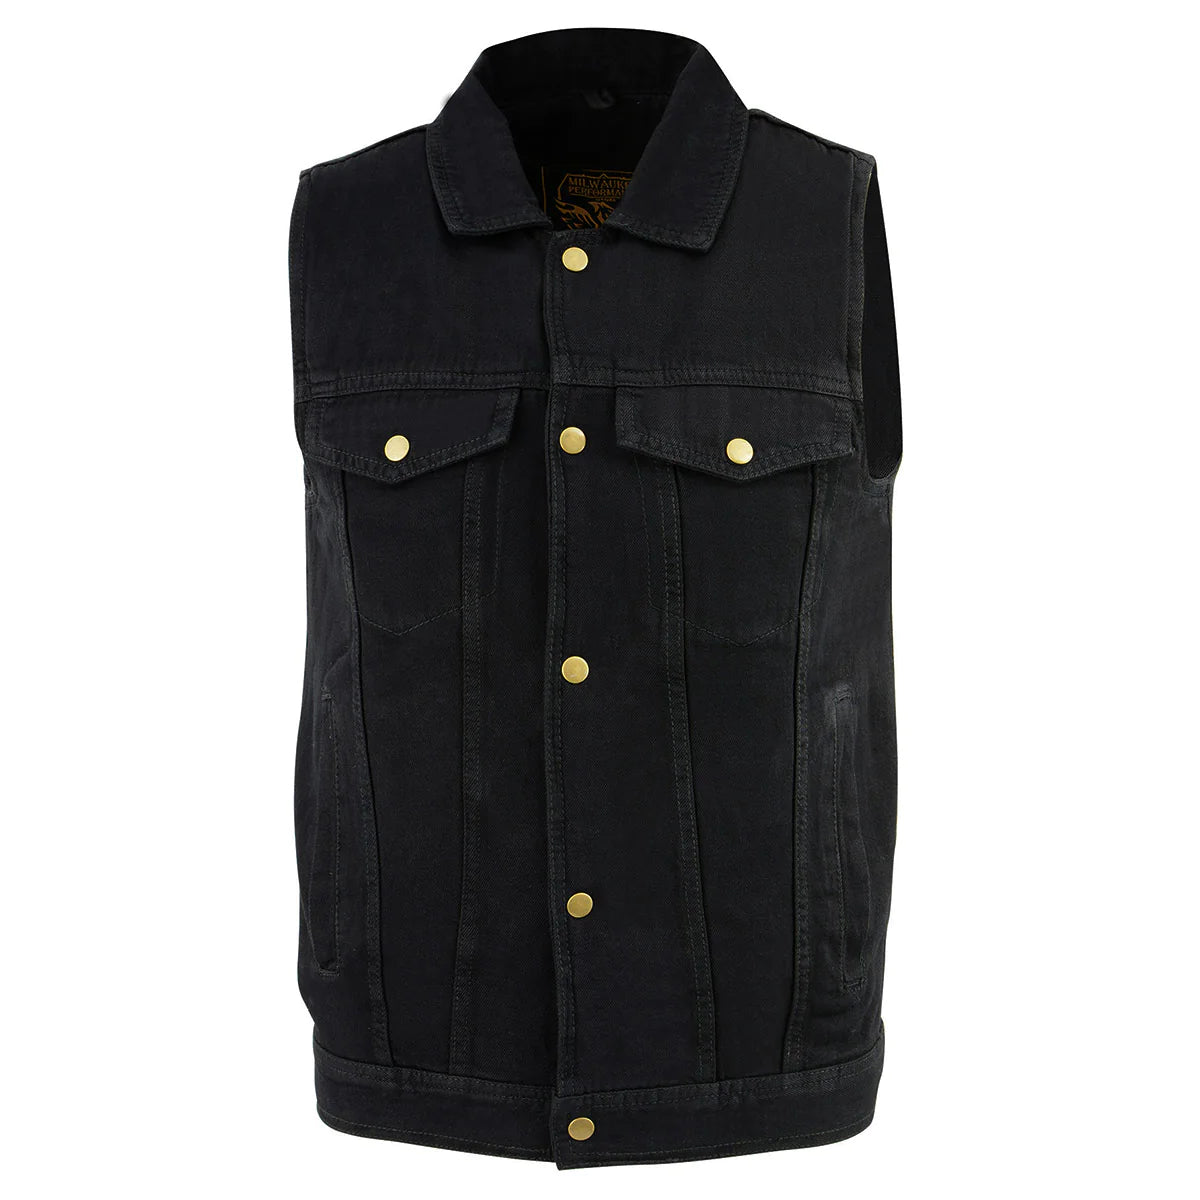 Men's Black Snap Front Denim Vest with Shirt Style Collar